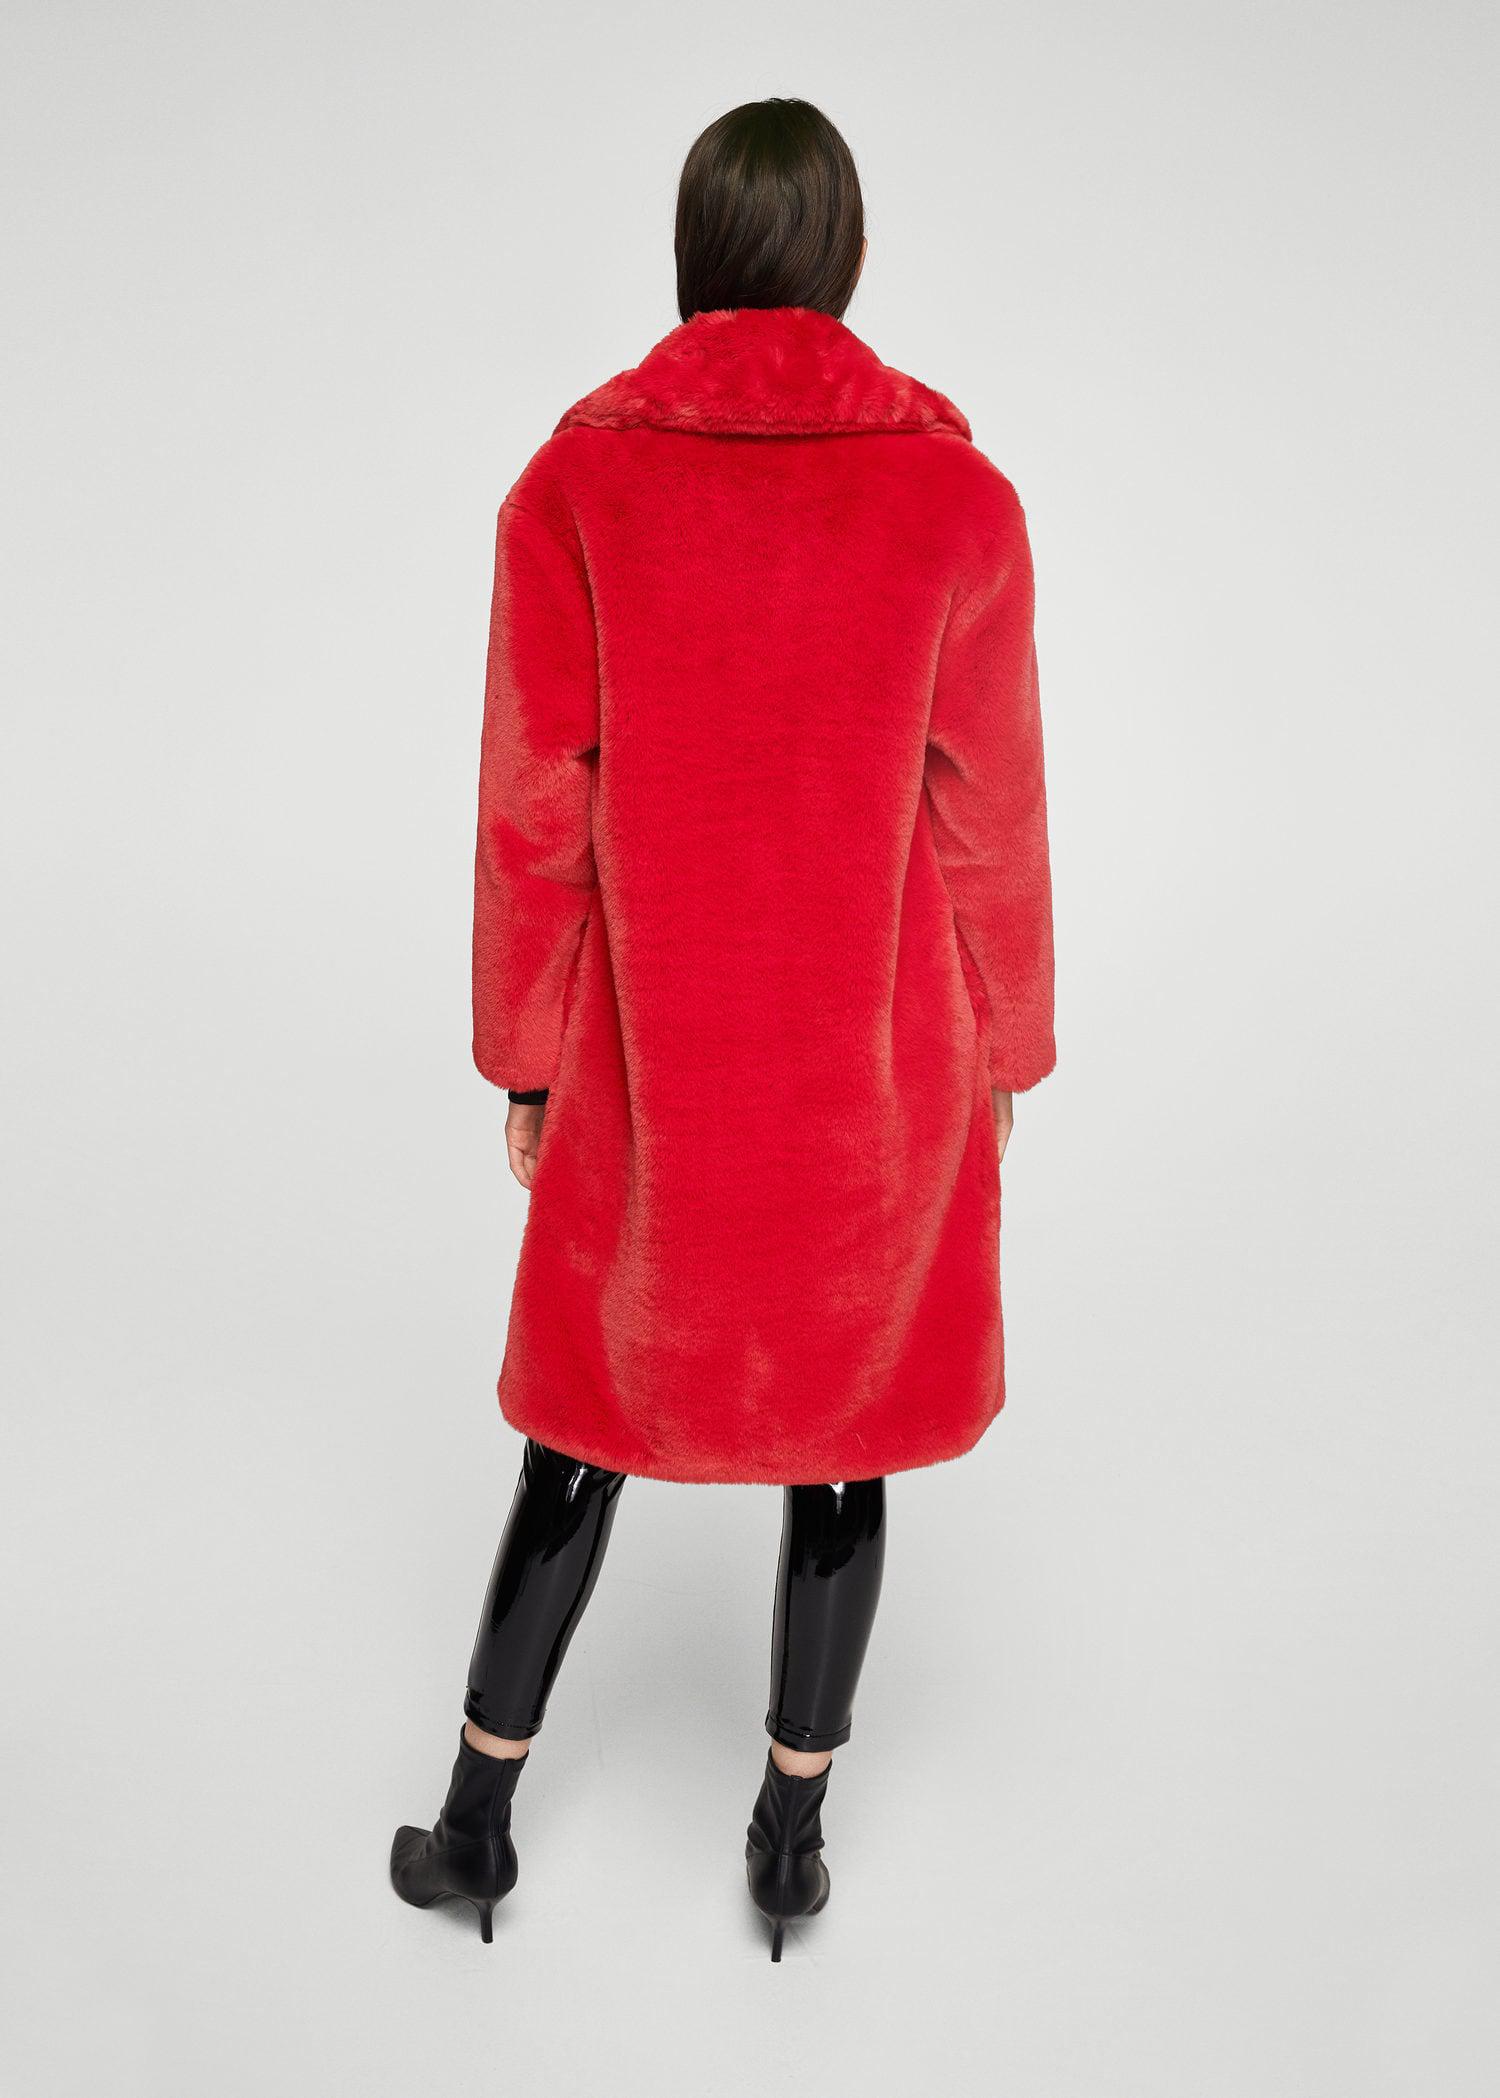 Mango Lapels Faux Fur Coat in Red | Lyst UK